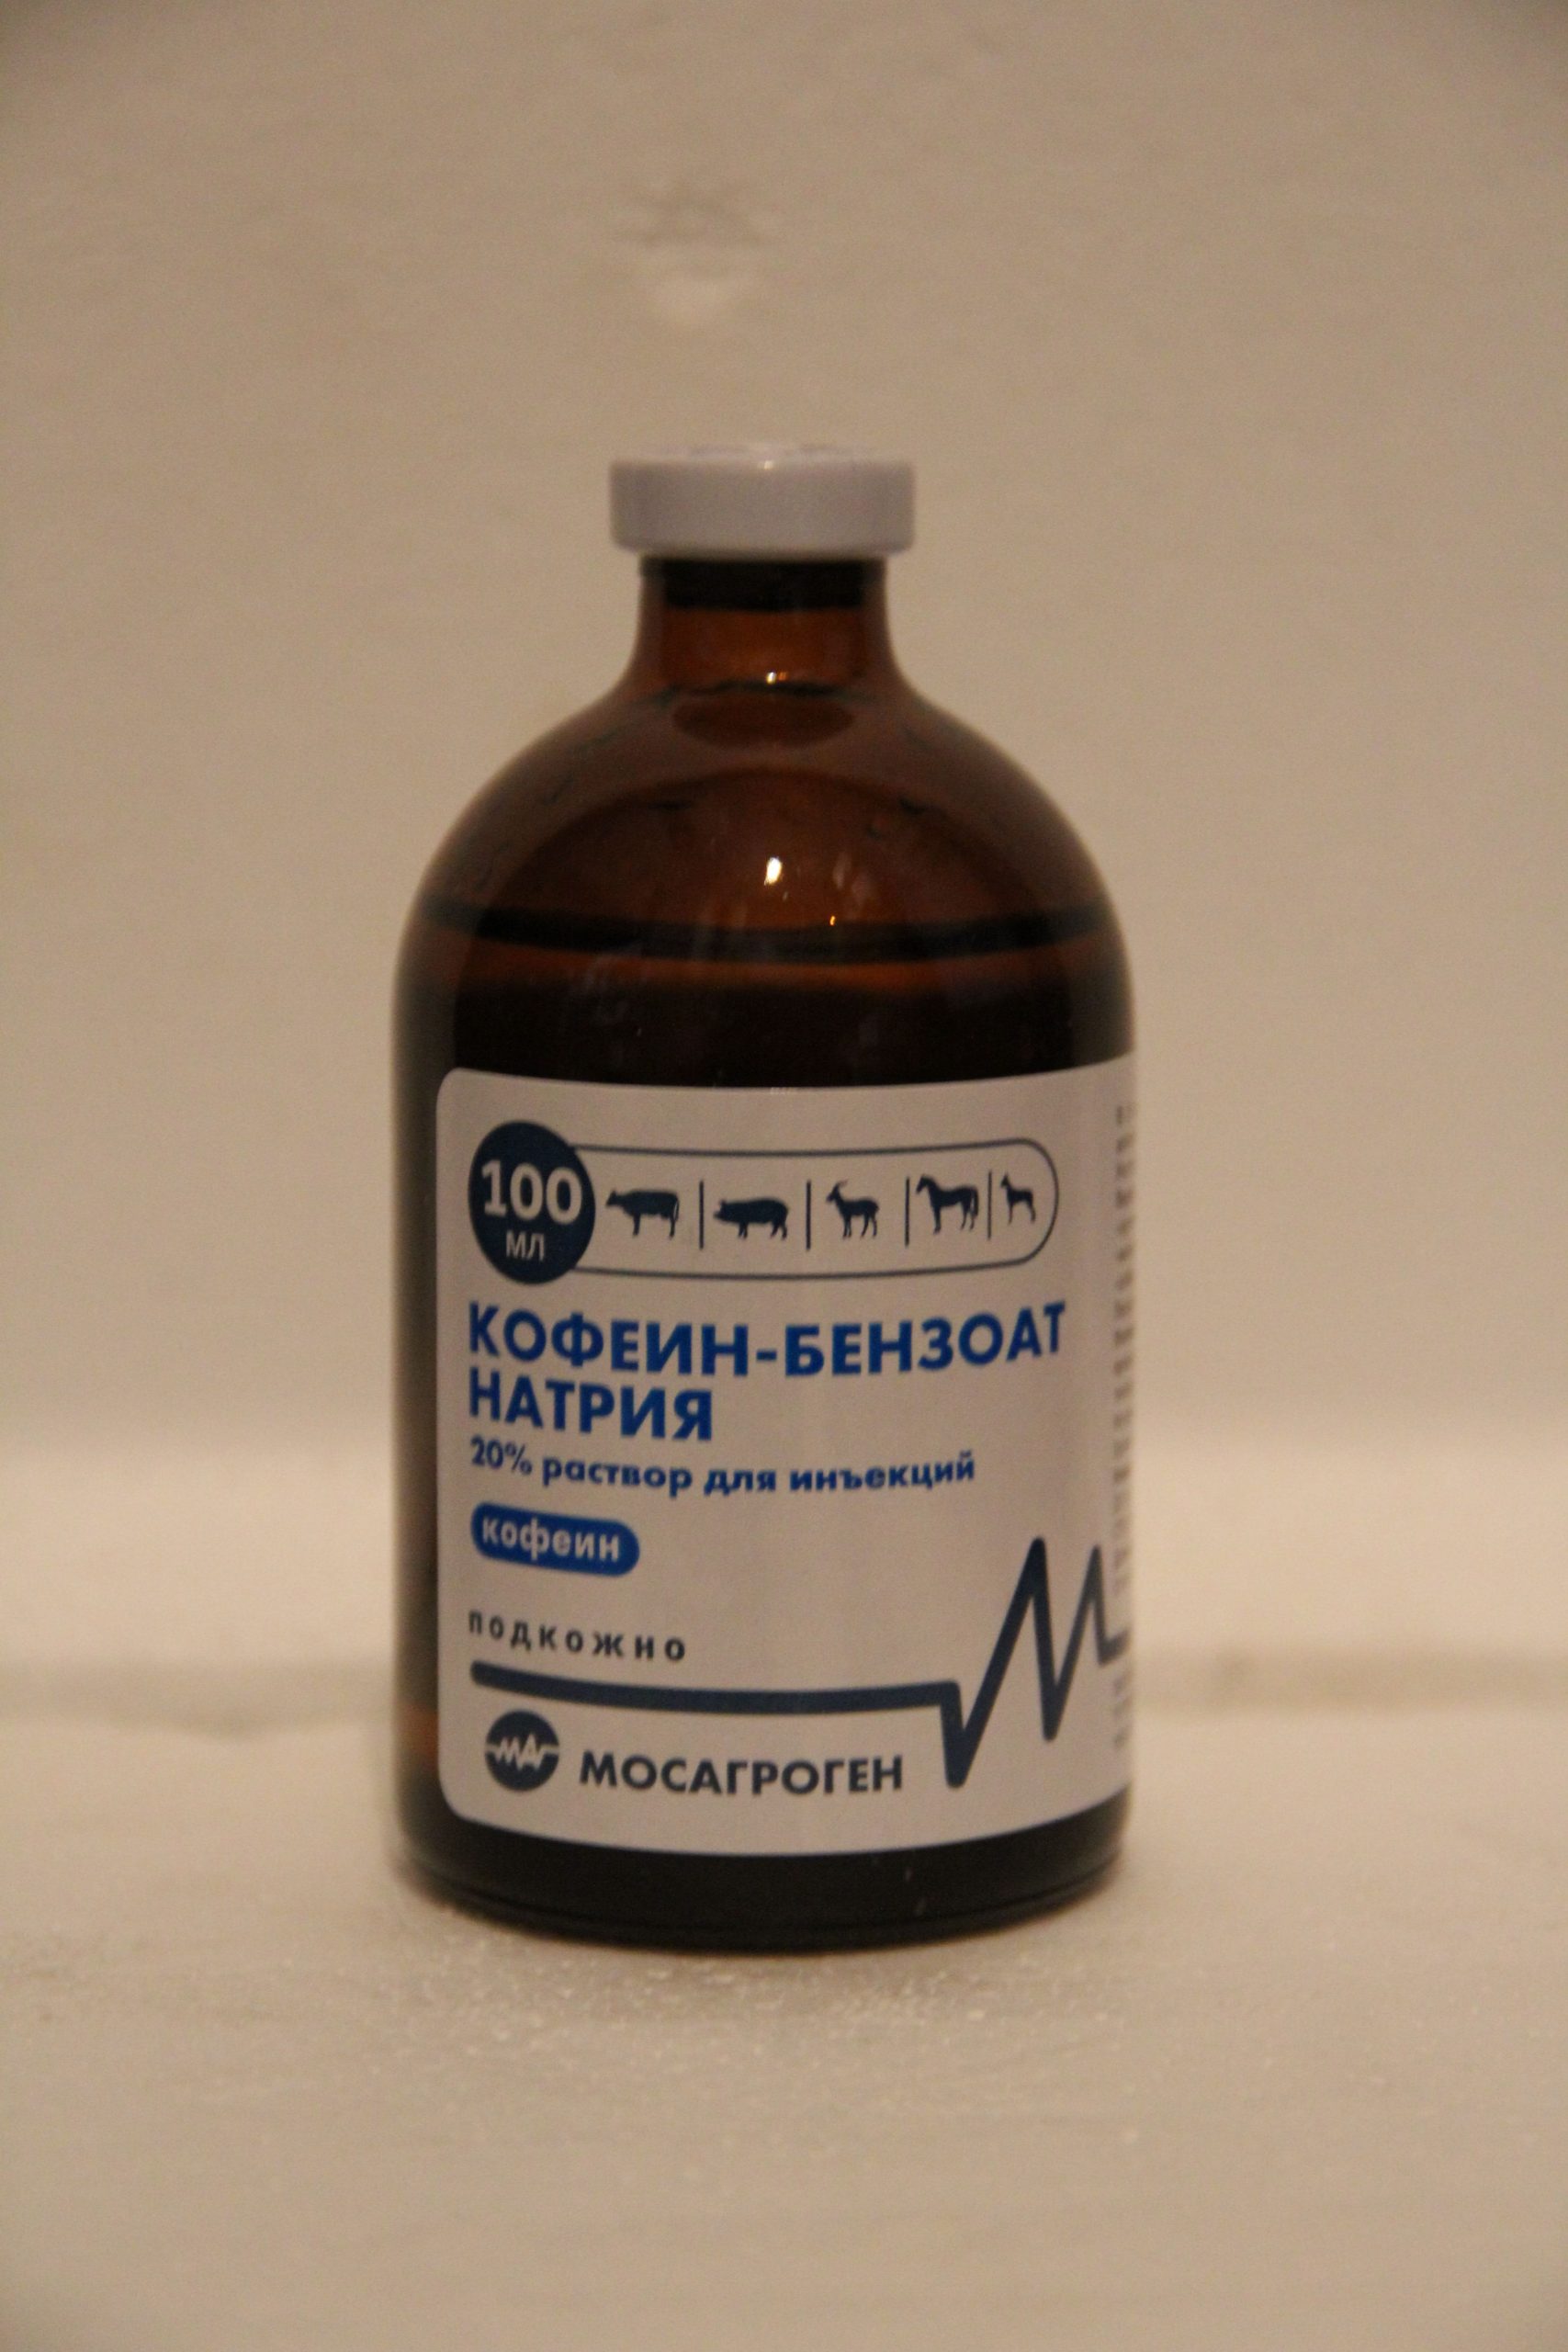 Кофеин бензоат натрия 20% (100мл) - ZooFarm.by